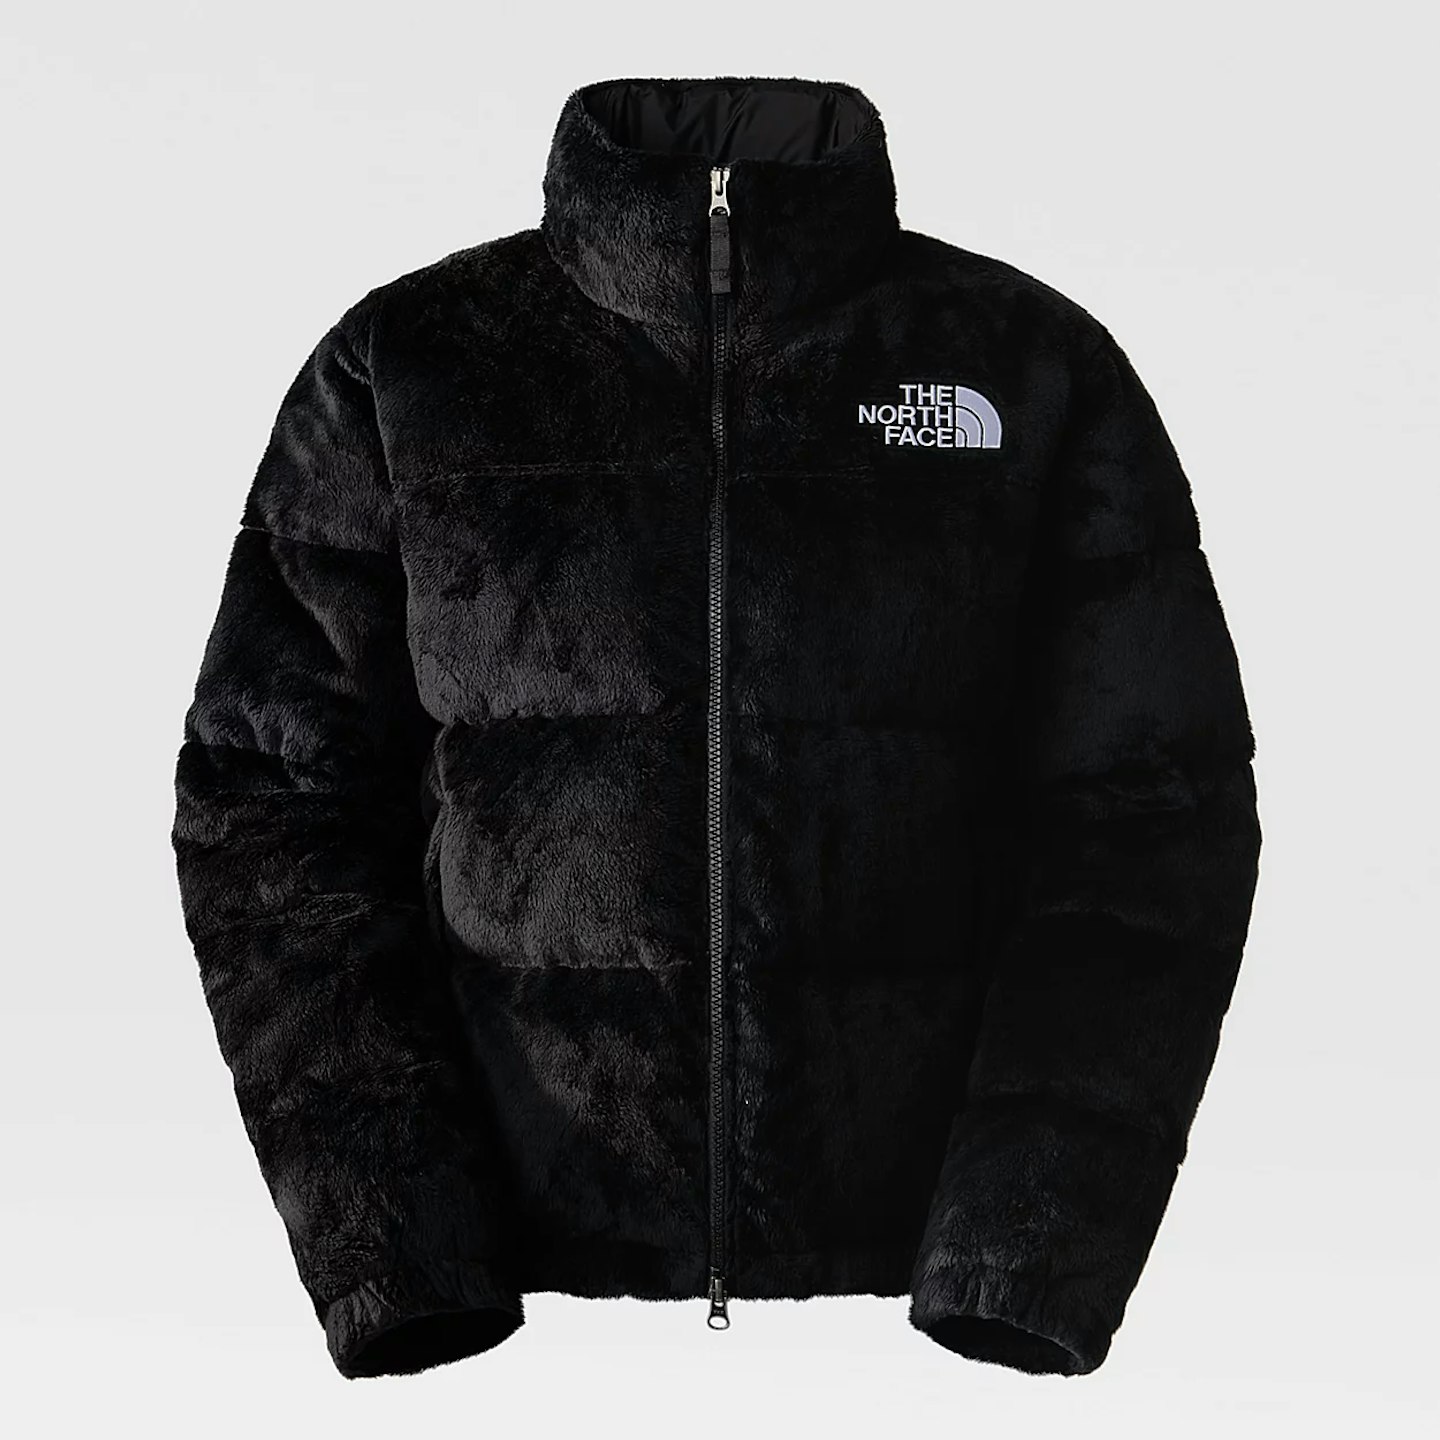 The North Face, Versa Velour Nuptse Jacket